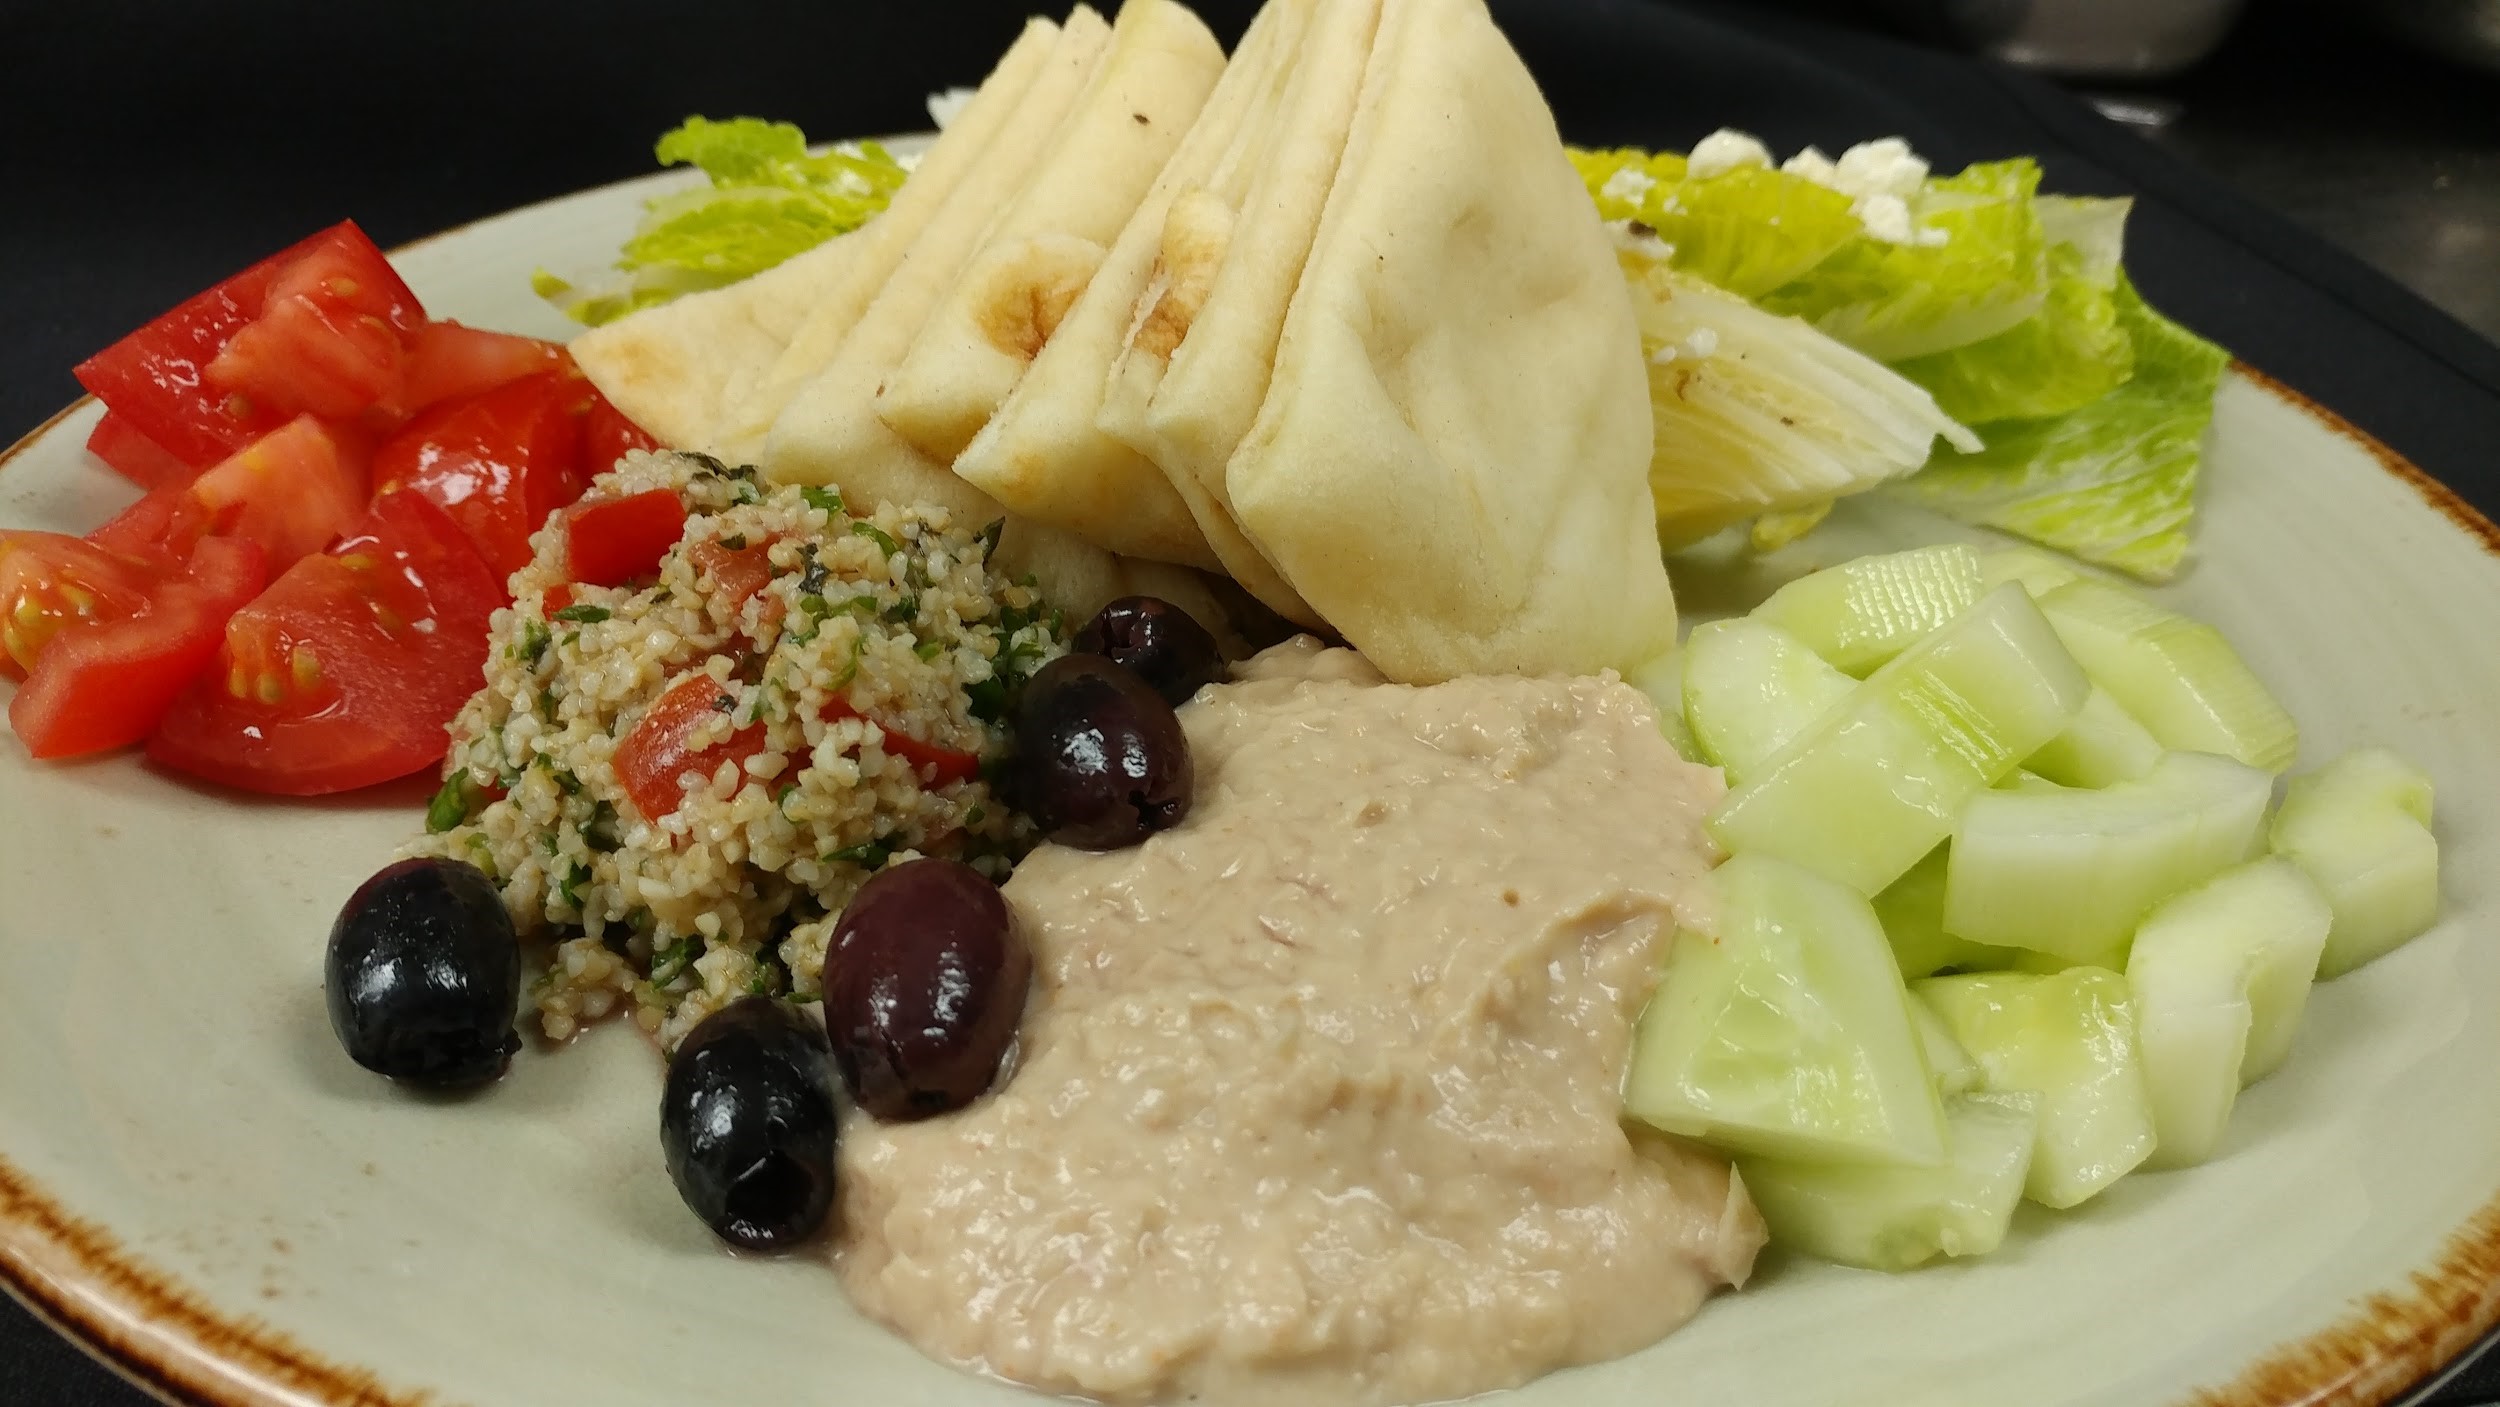 Greek salad, featuring tabbouleh.